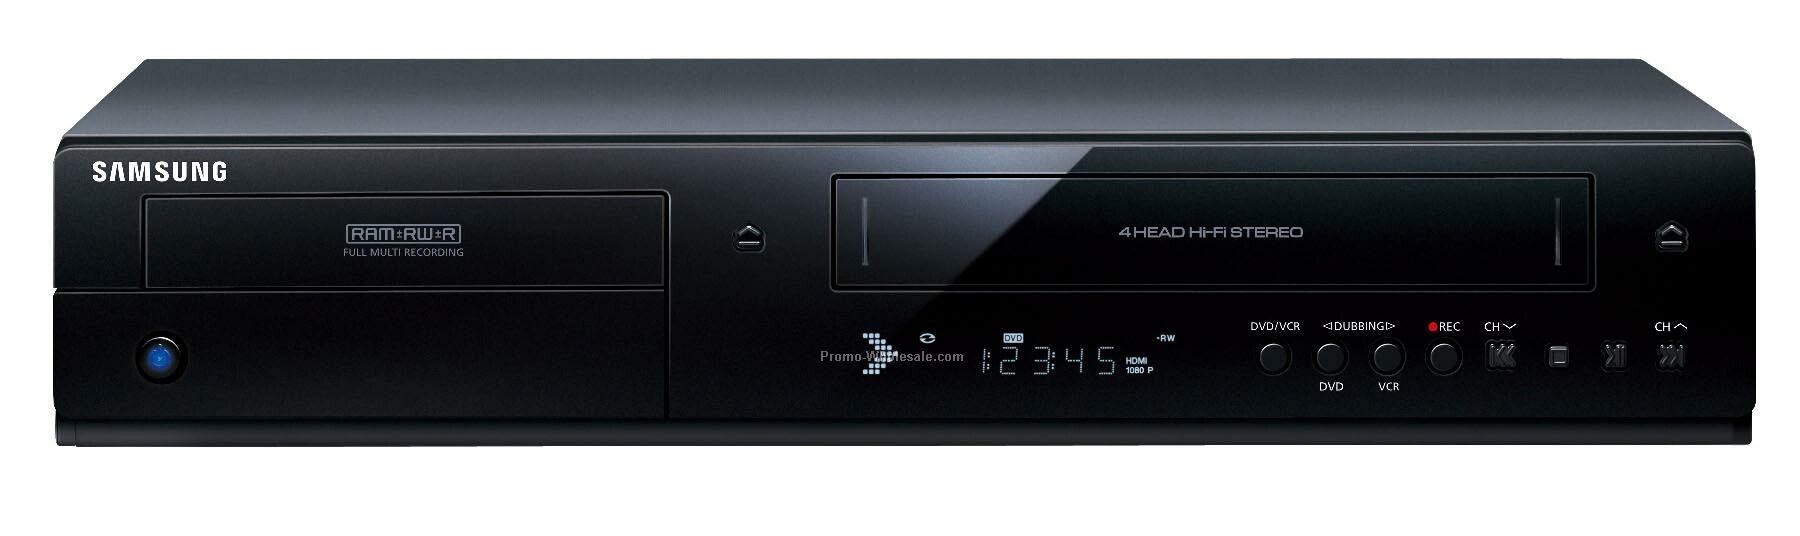 Samsung DVD Recorder/Vcr Combo